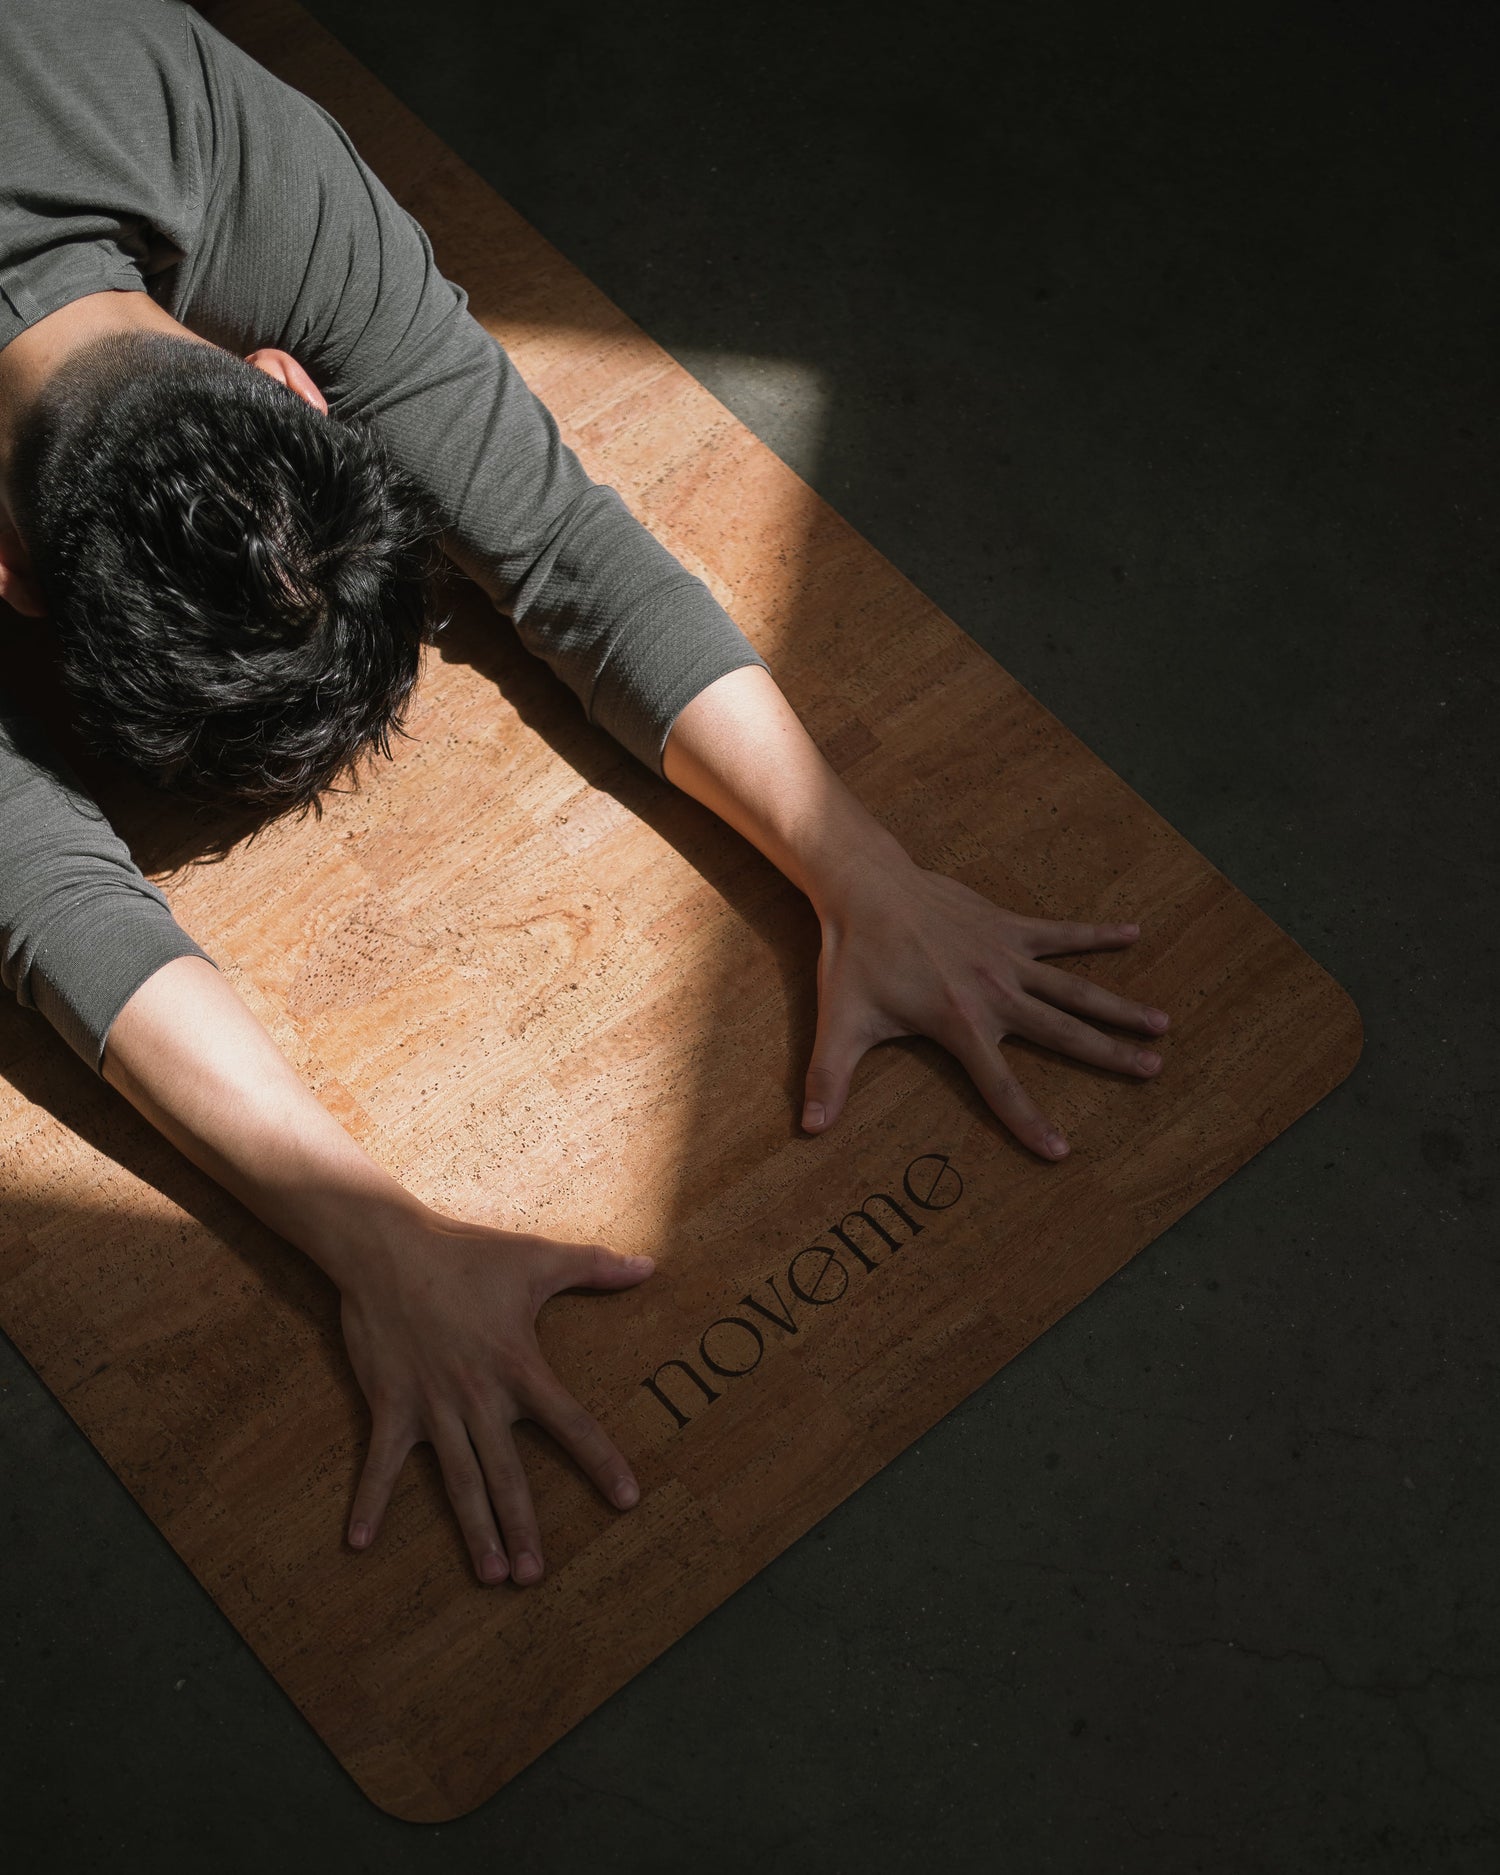 Man doing child's pose on a Noveme cork yoga mat